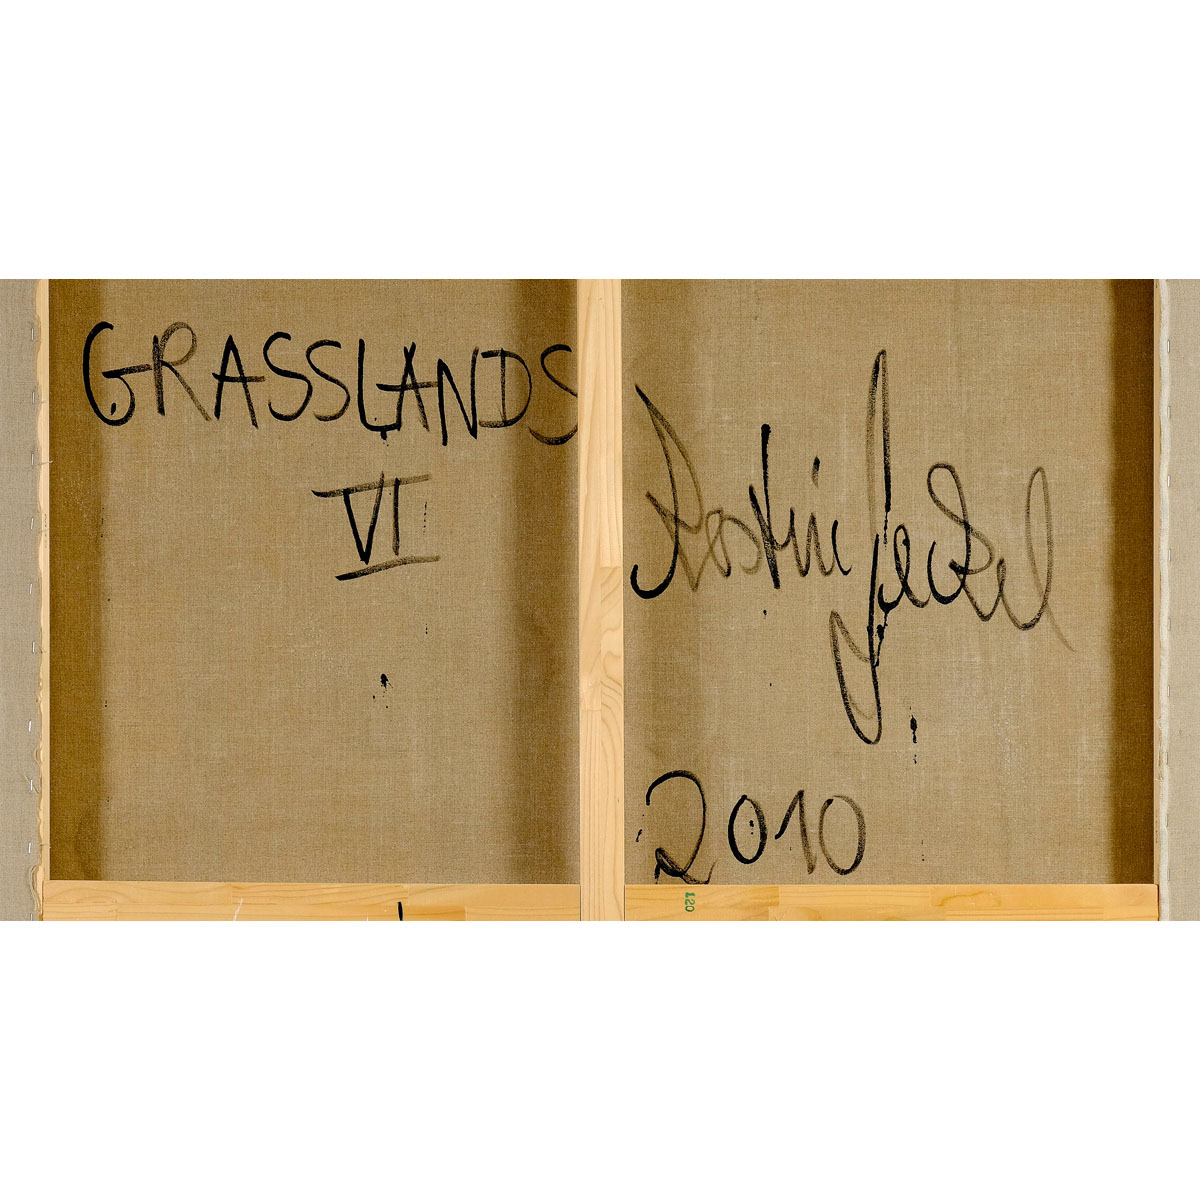 GRASSLANDS *VI